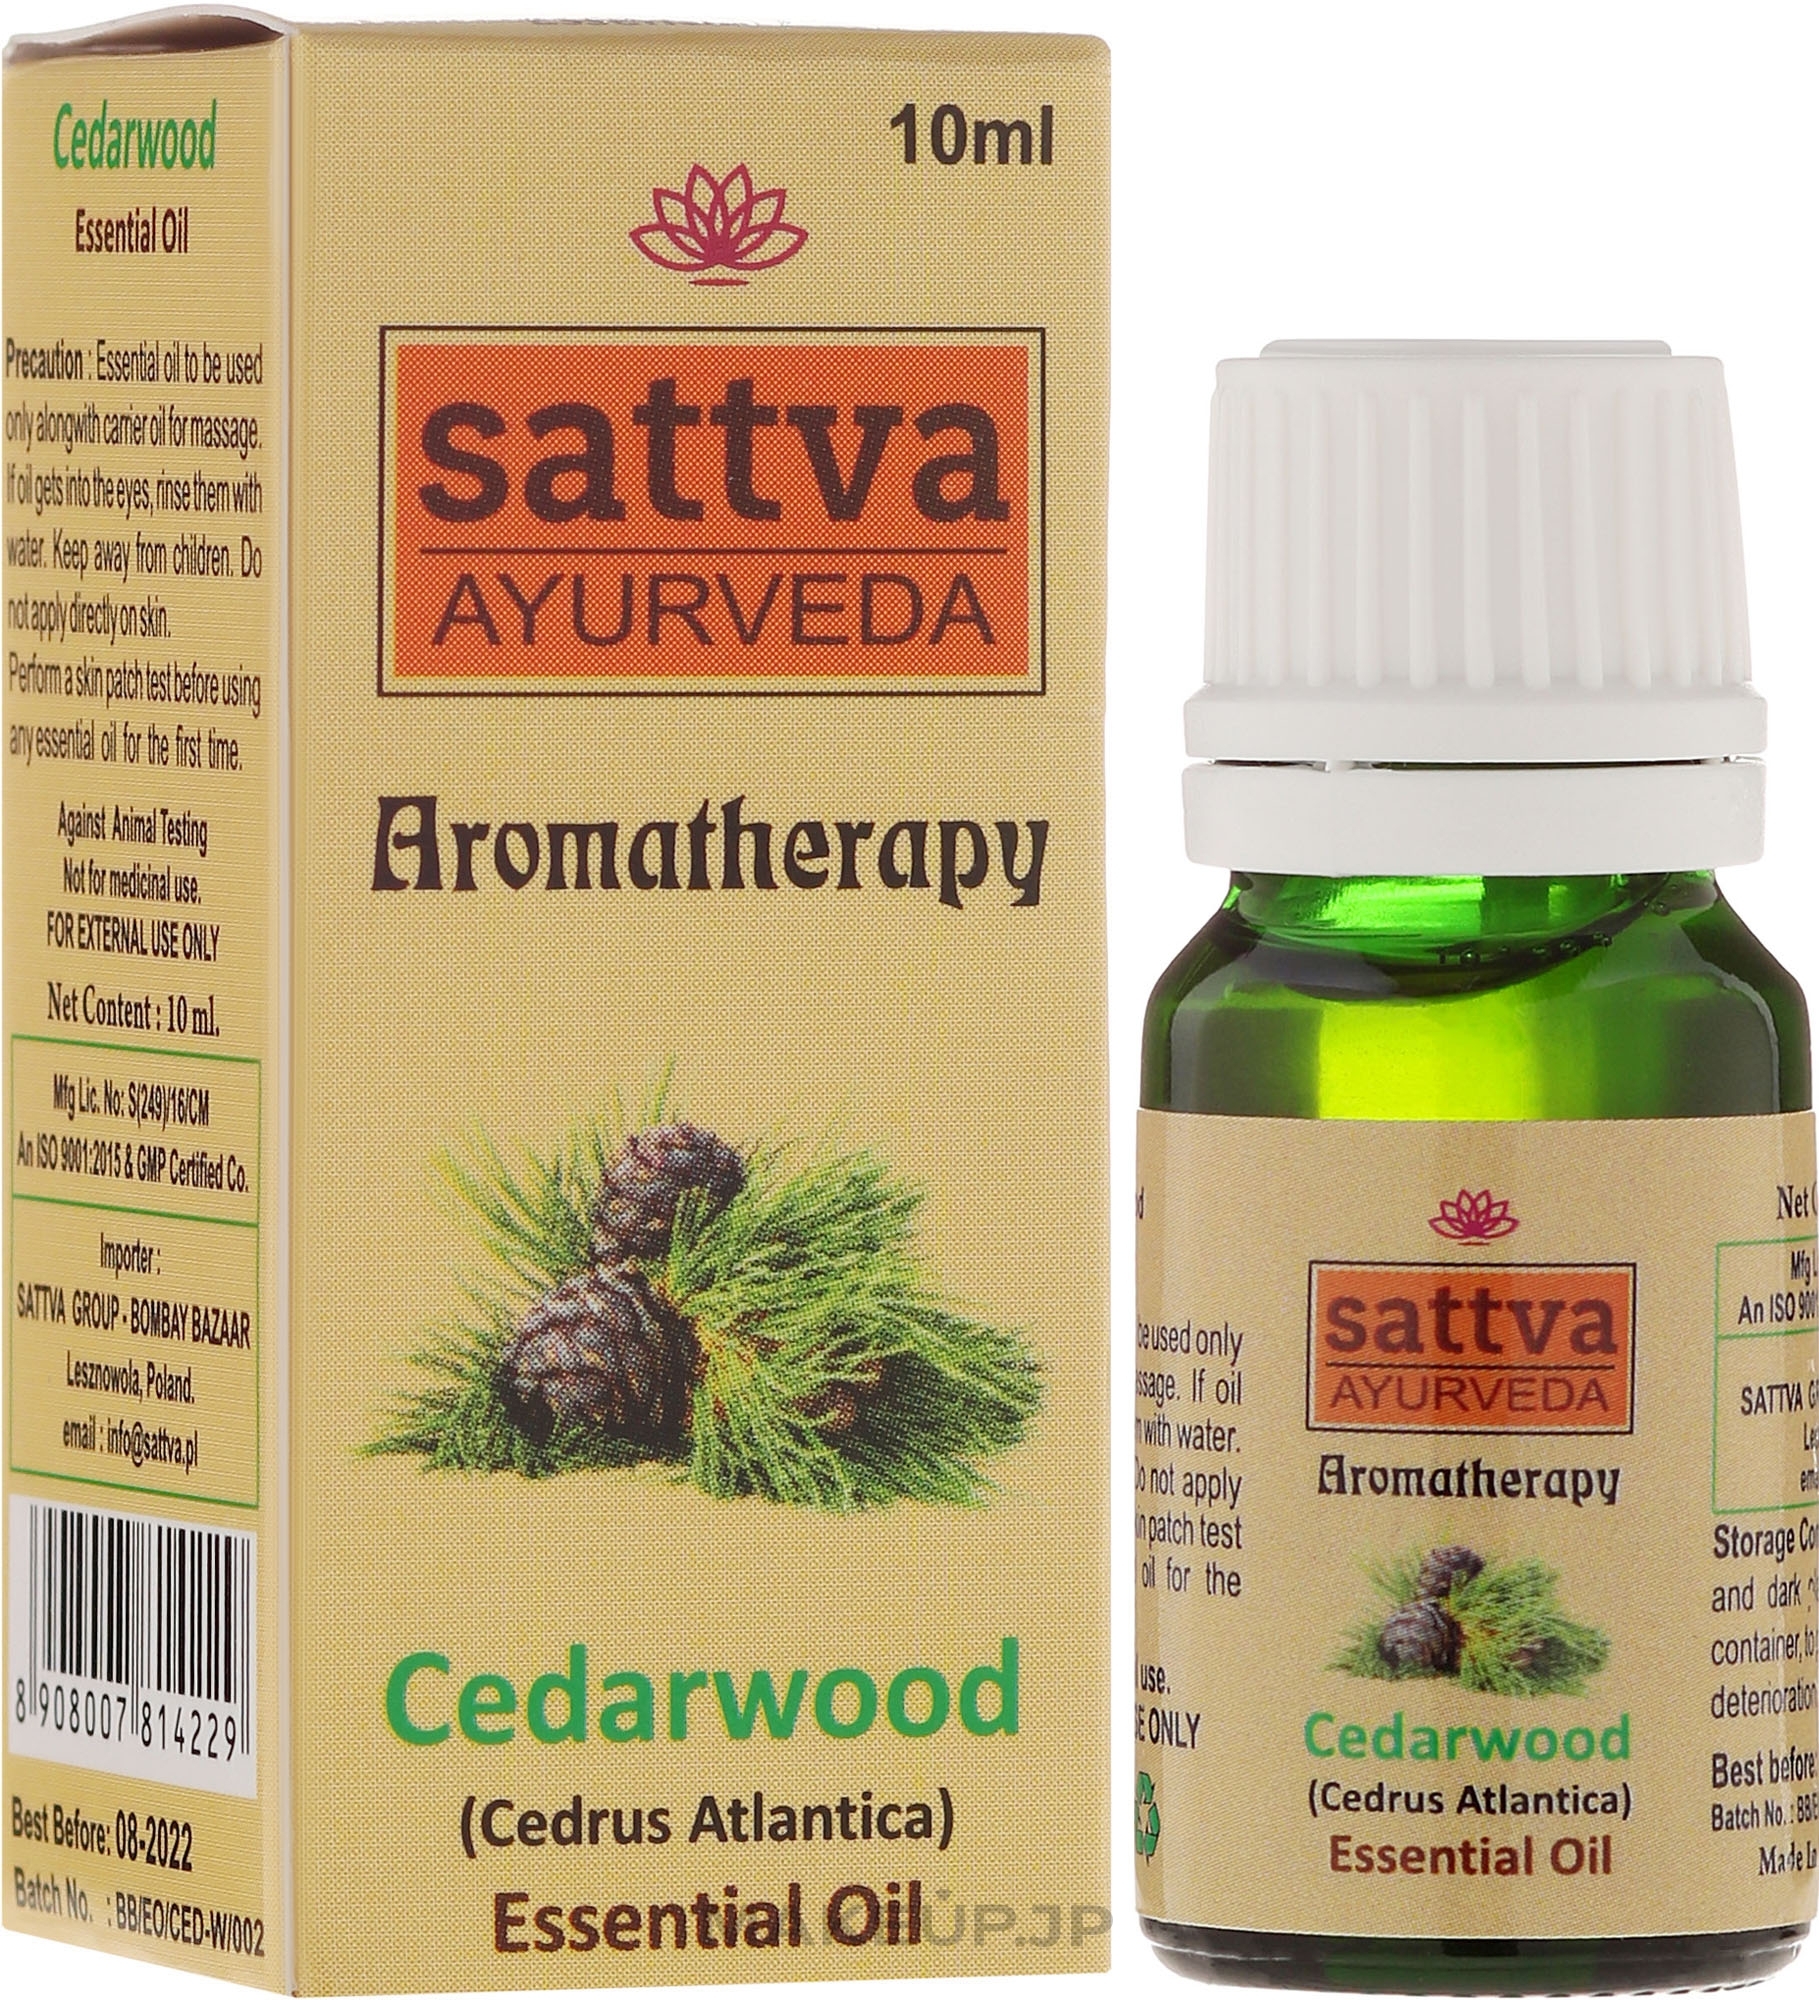 Essential Oil "Cedarwood" - Sattva Ayurveda Cedarwood Essential Oil — photo 10 ml